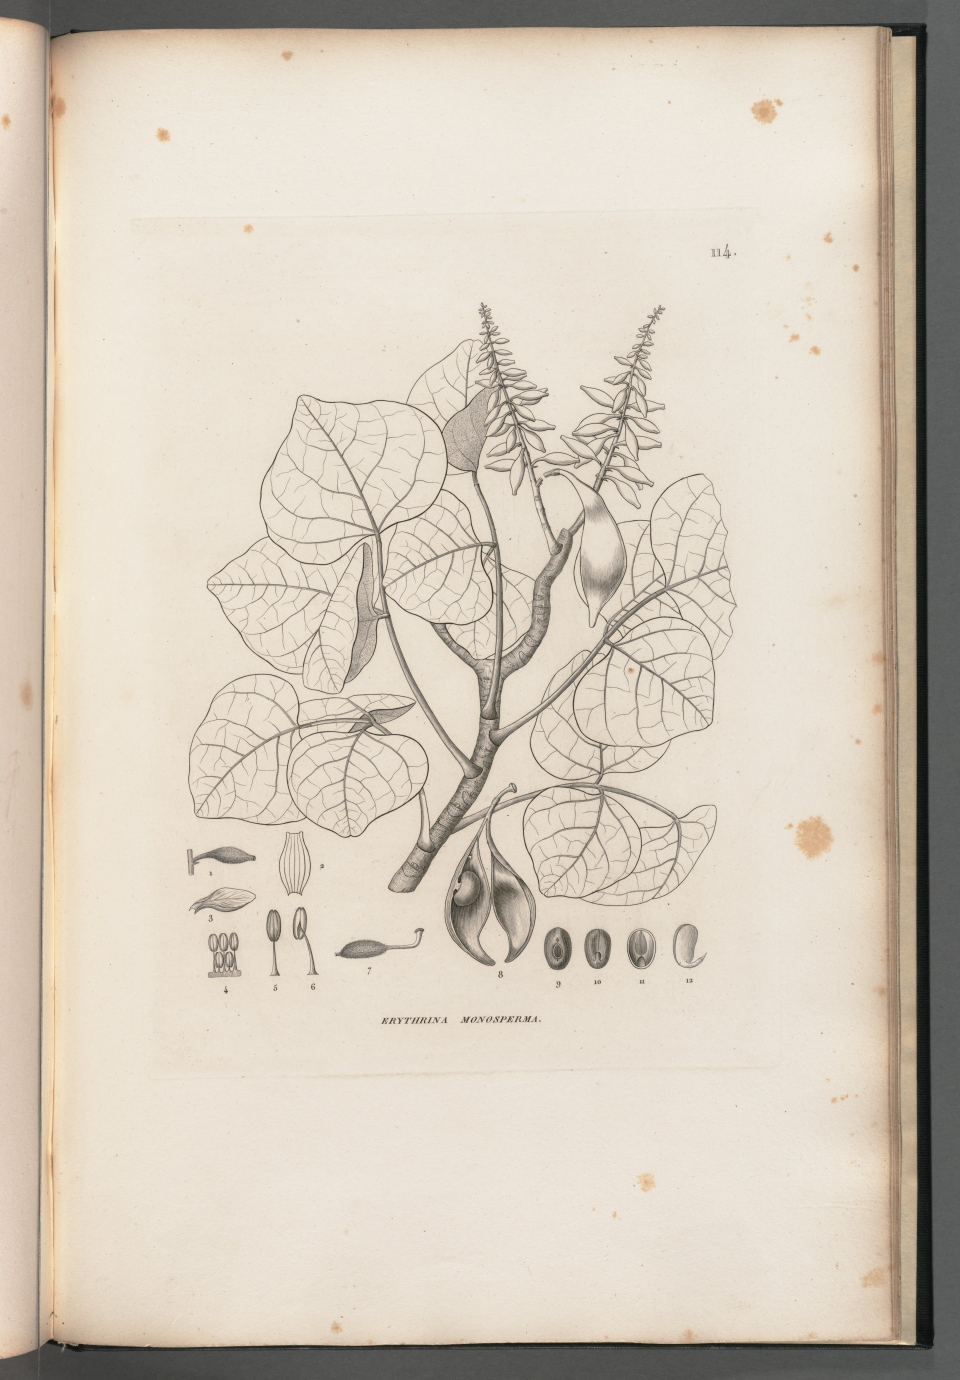 Erythrina tahitensis